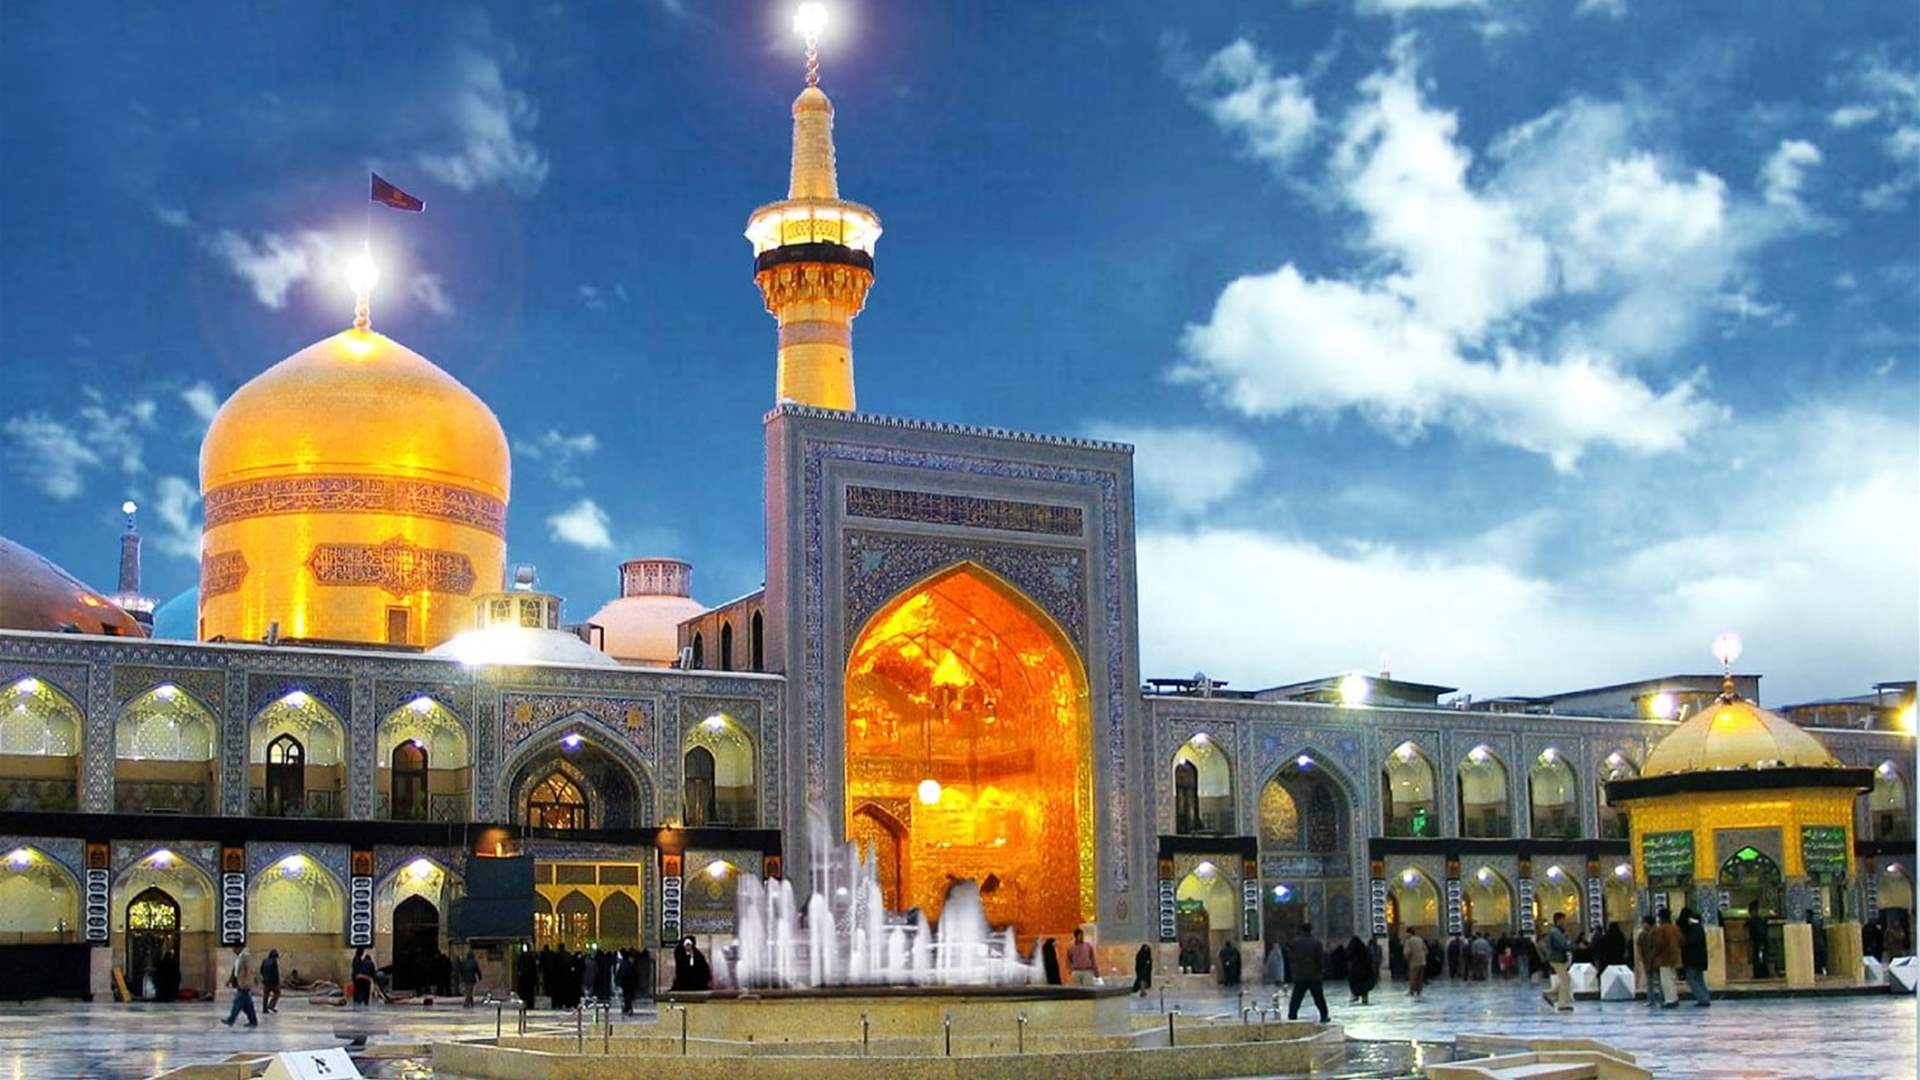 Raisi&#39;s final resting place: The revered shrine of Imam Reza in Mashhad